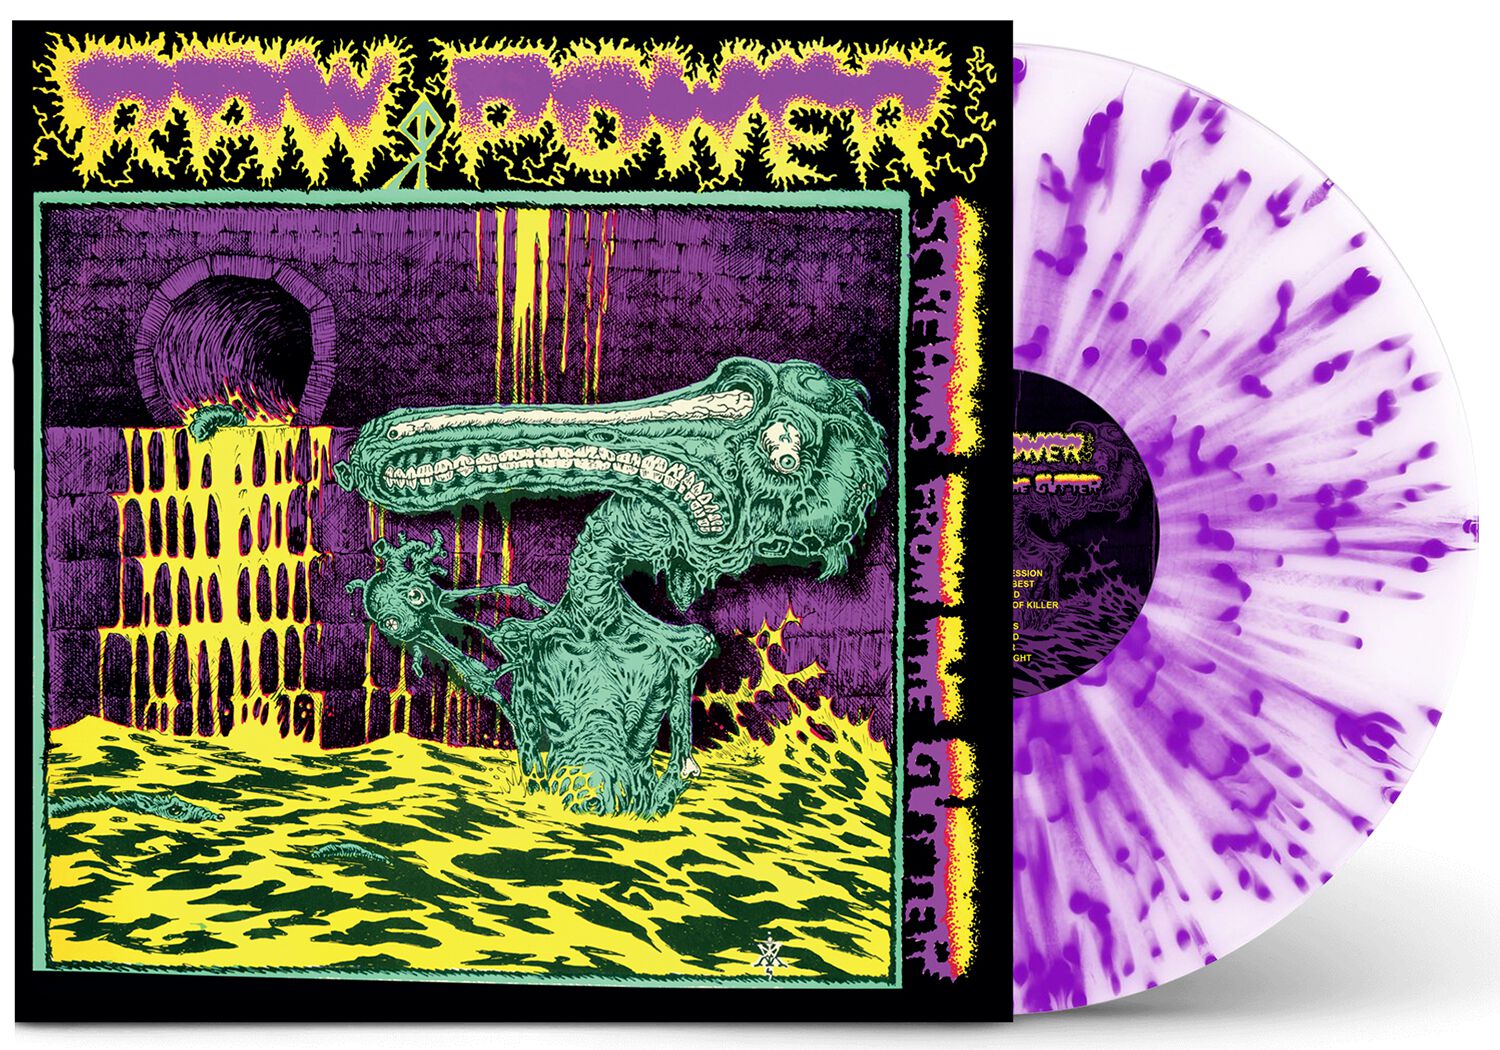 Raw Power Screams from the gutter LP splattered